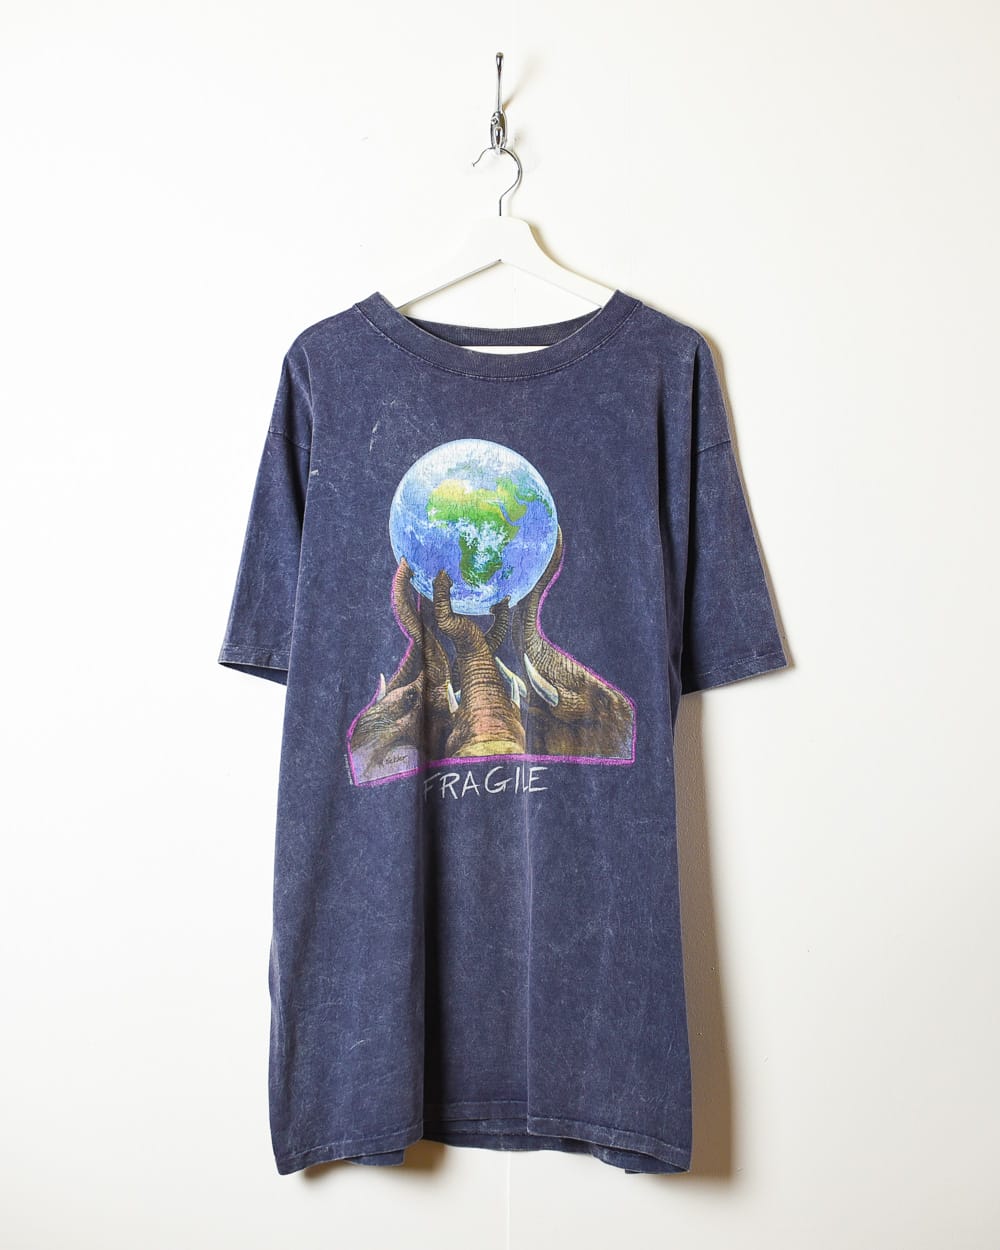 Navy Fragile Earth Single Stitch T-Shirt - X-Large